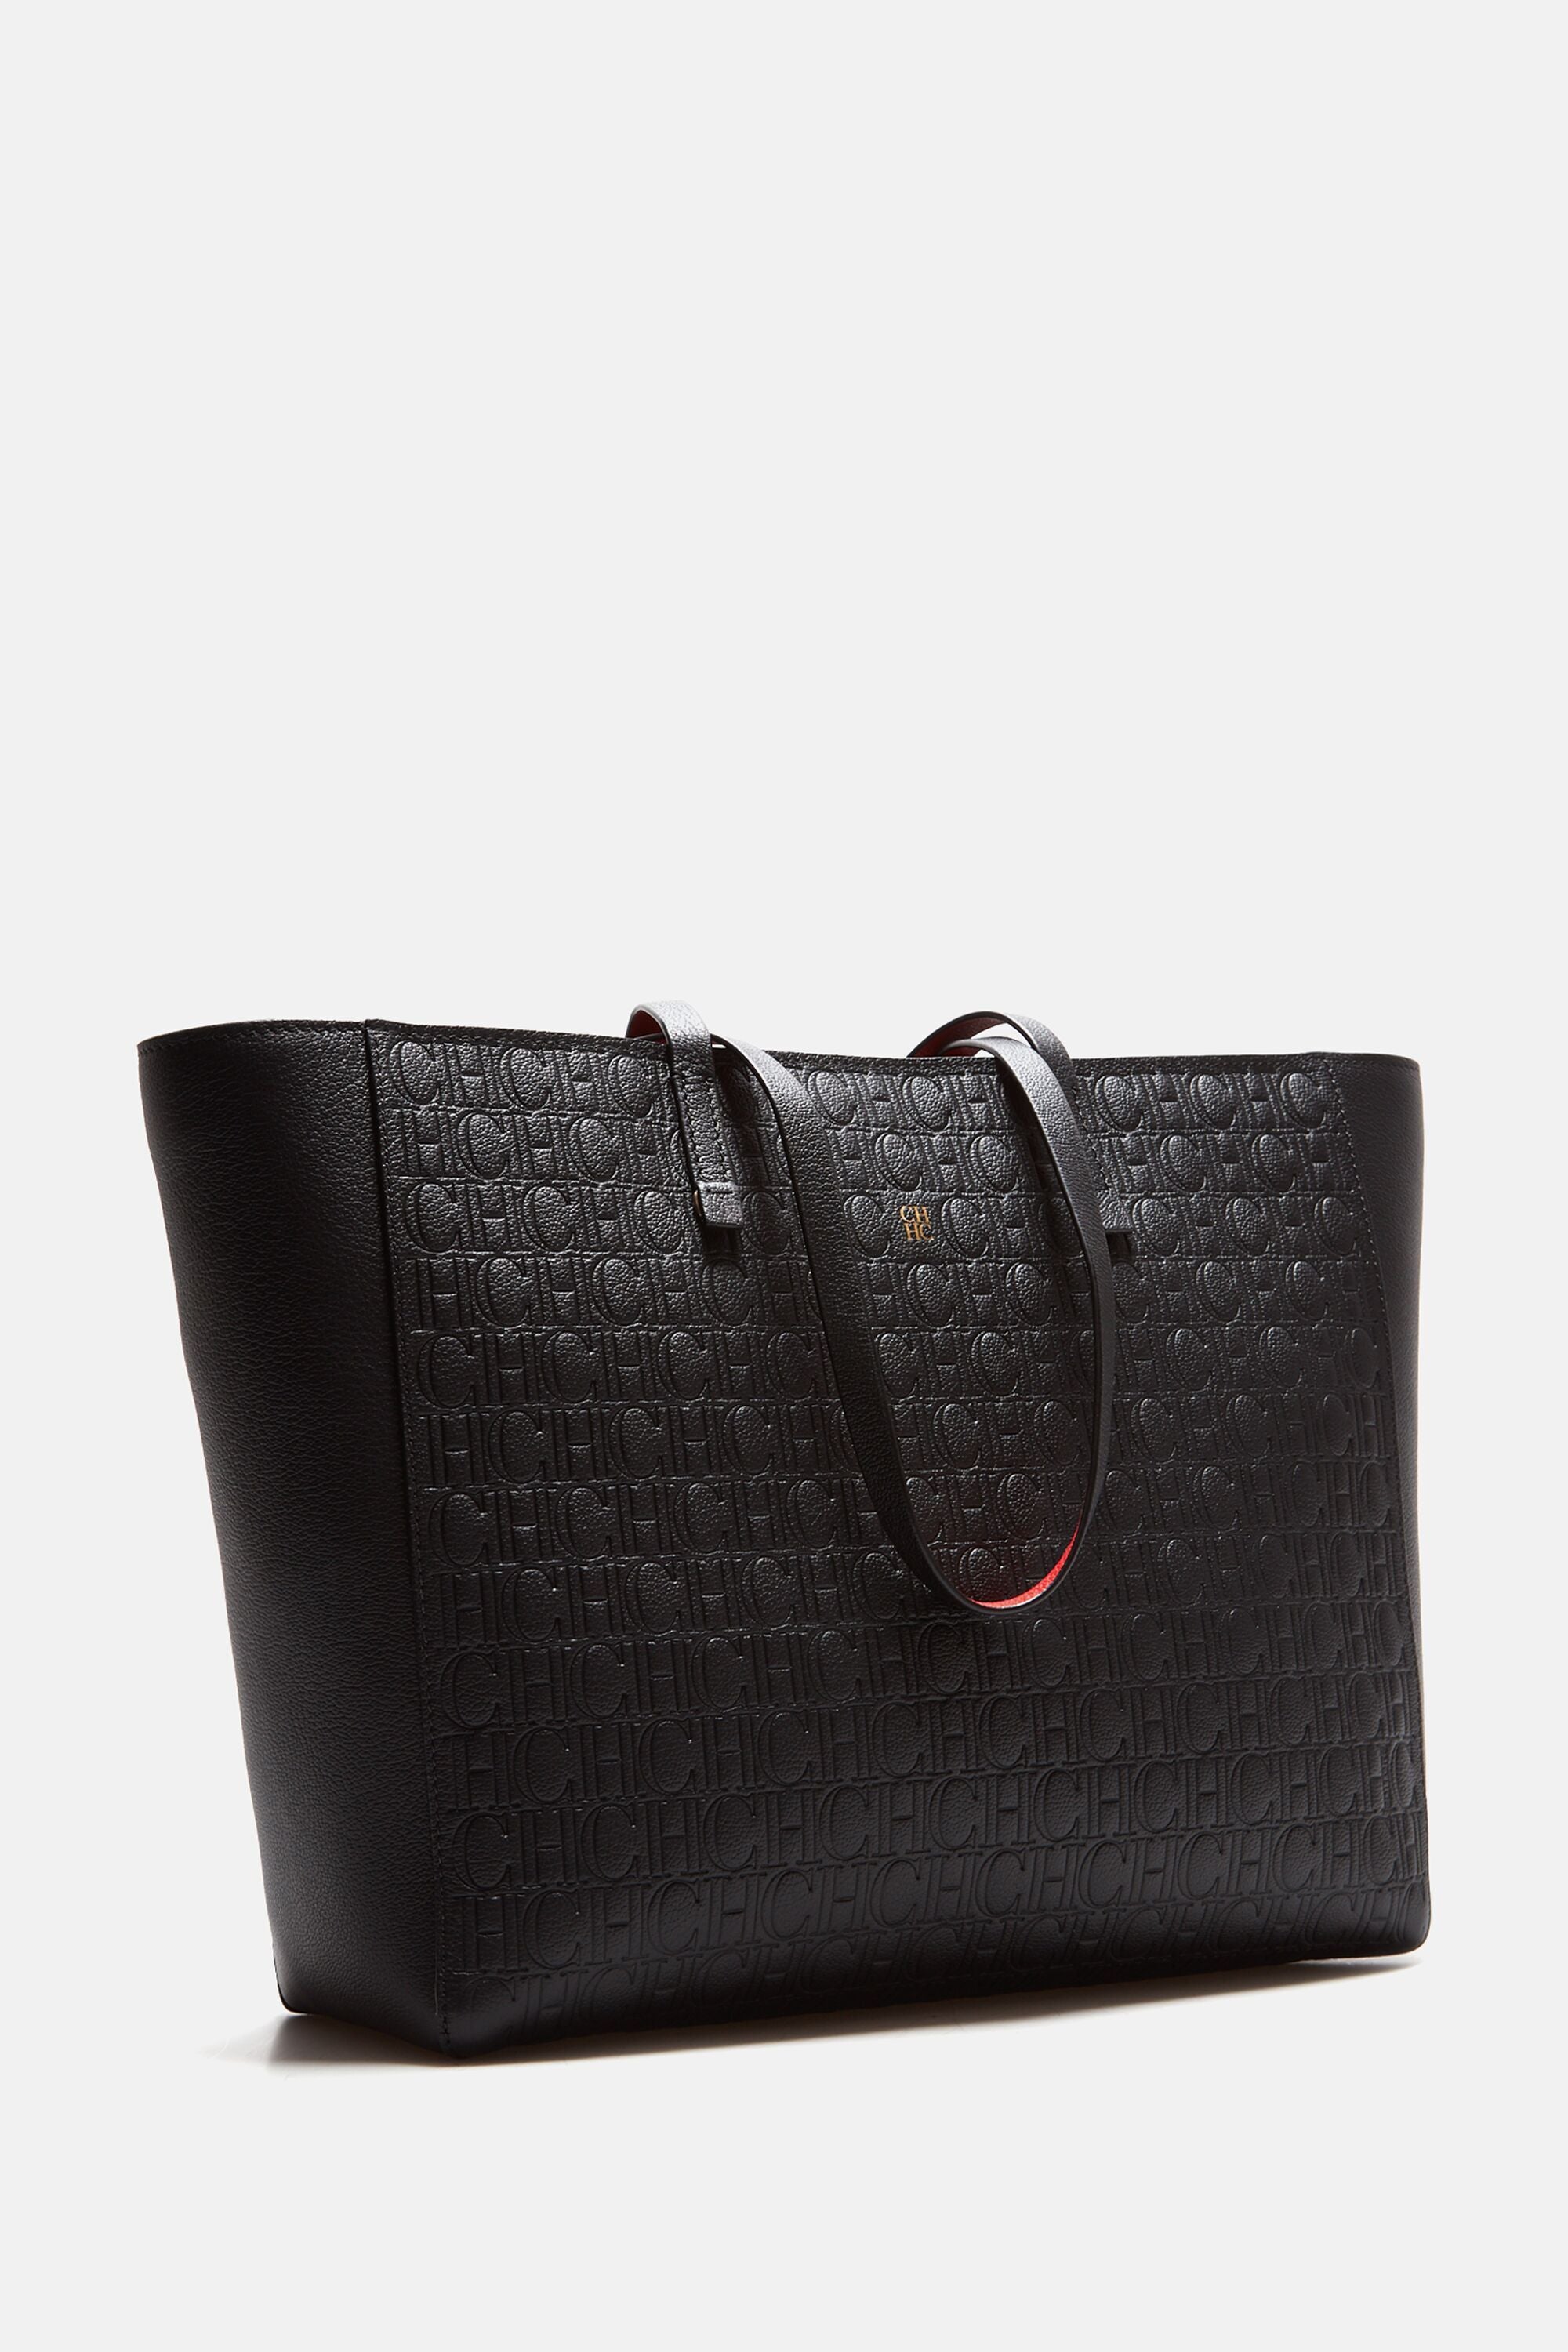 Editors Shopping Zip  Large shoulder bag black - CH Carolina Herrera  United States